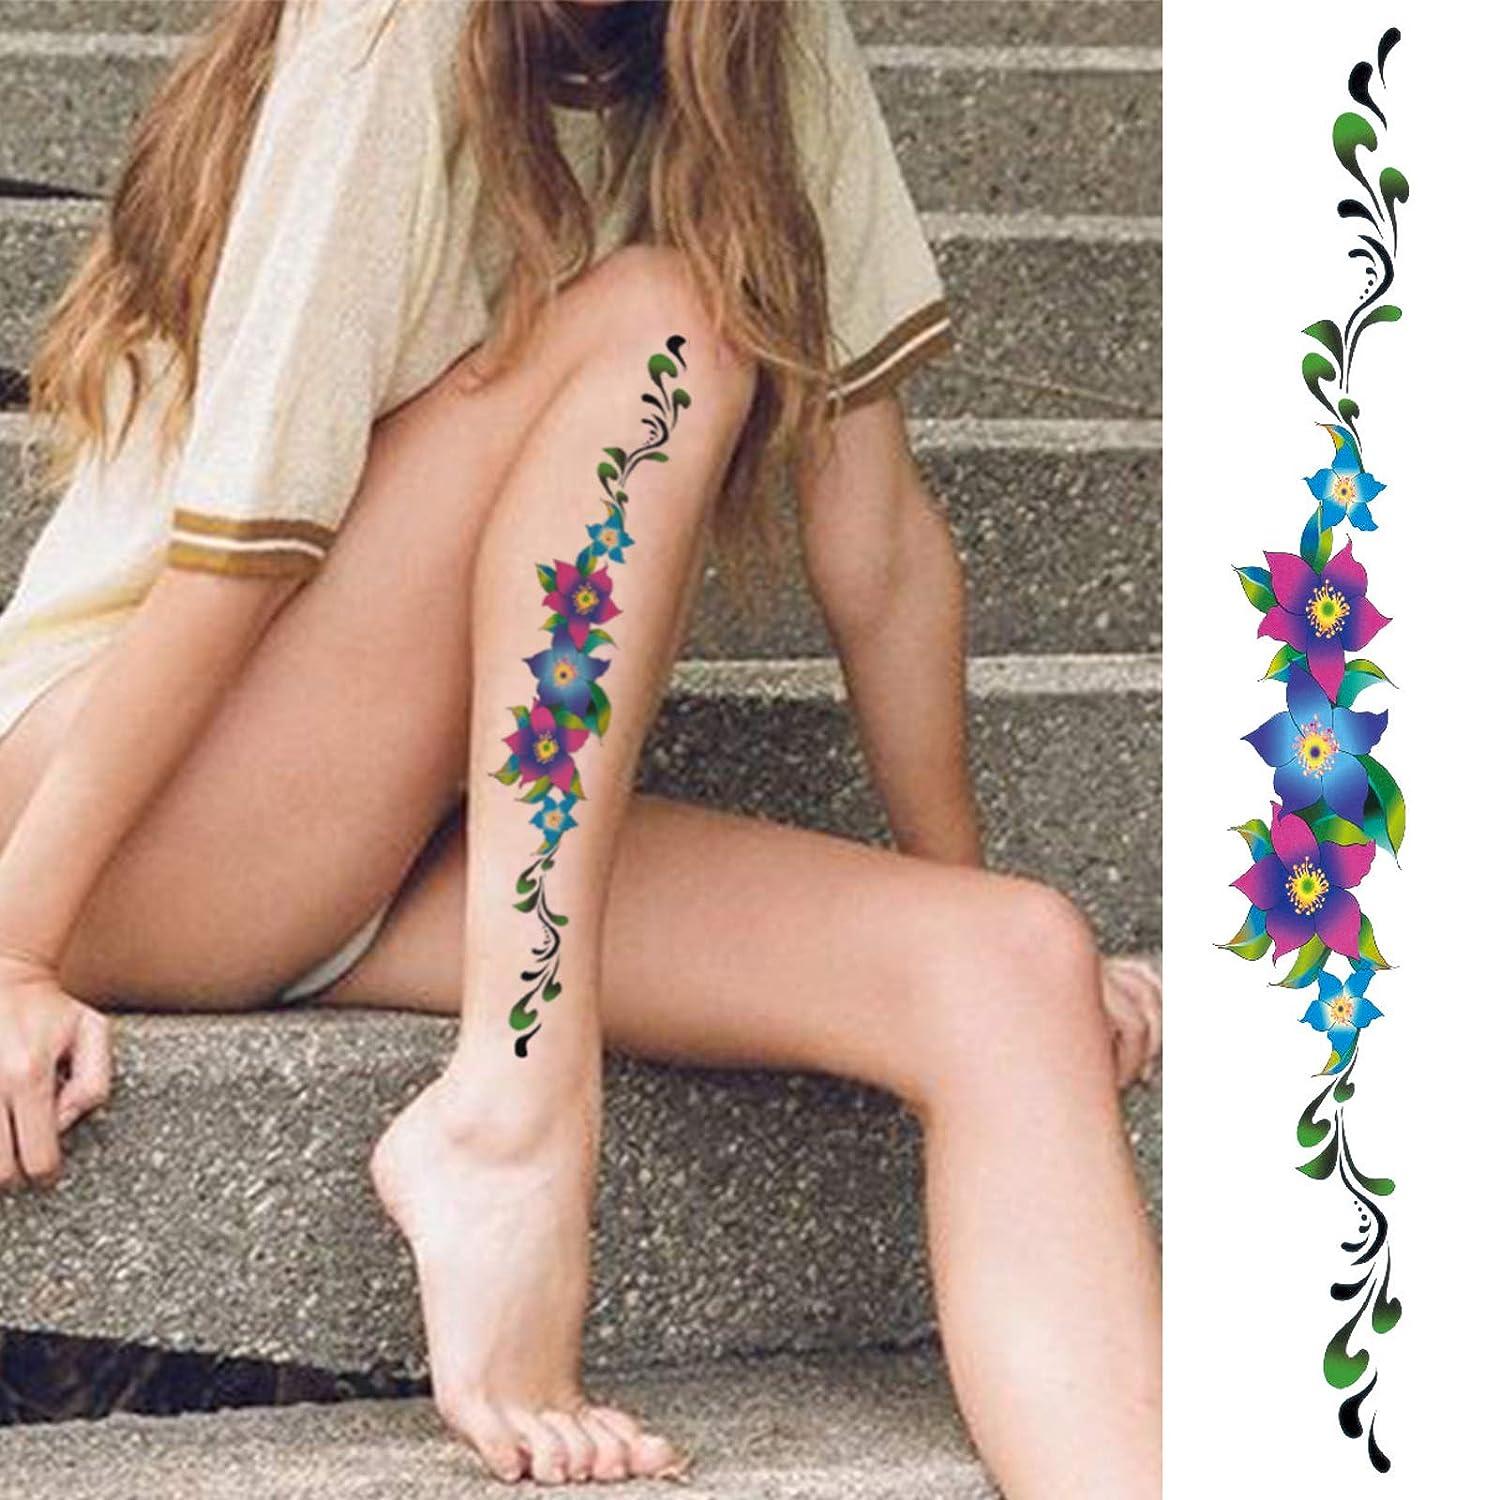 94 Baddie women's feminine spine tattoos - inktat2.com